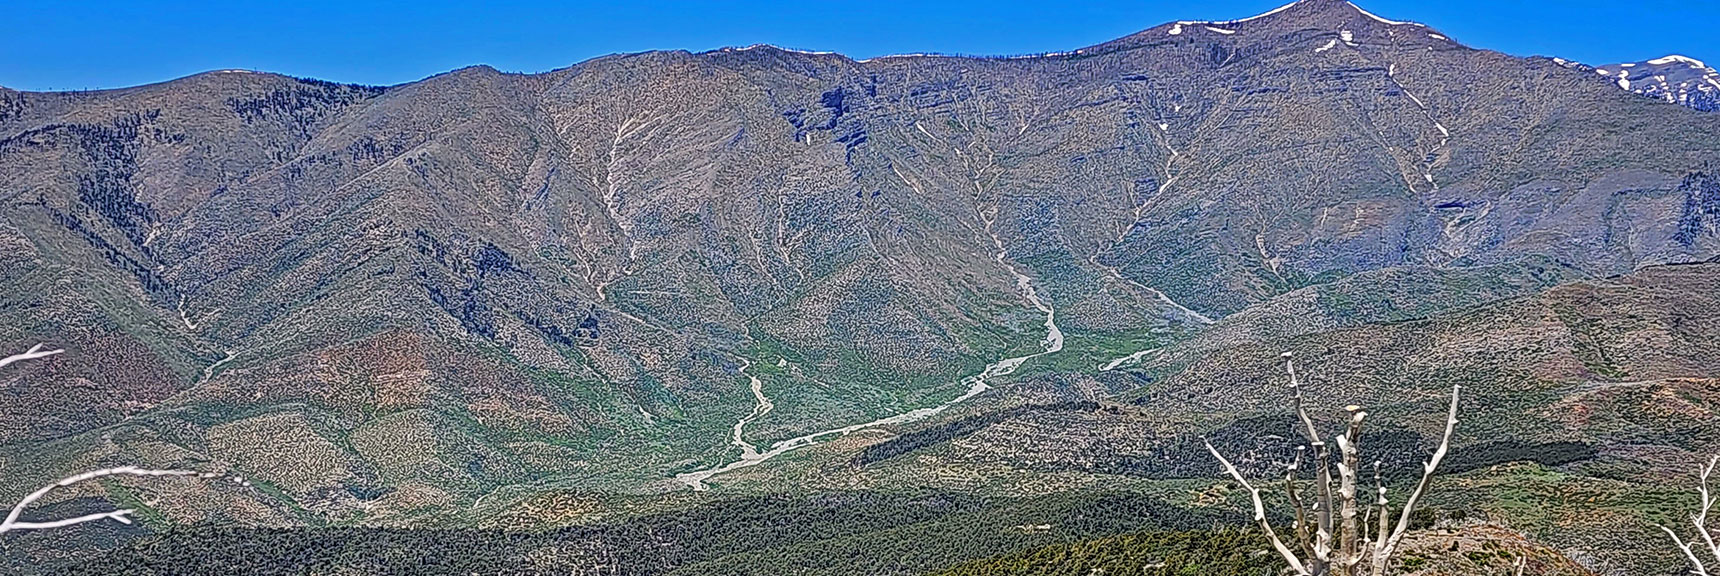 View Down into Lovell Canyon | Wilson Ridge Lovell Canyon Loop | Lovell Canyon, Nevada